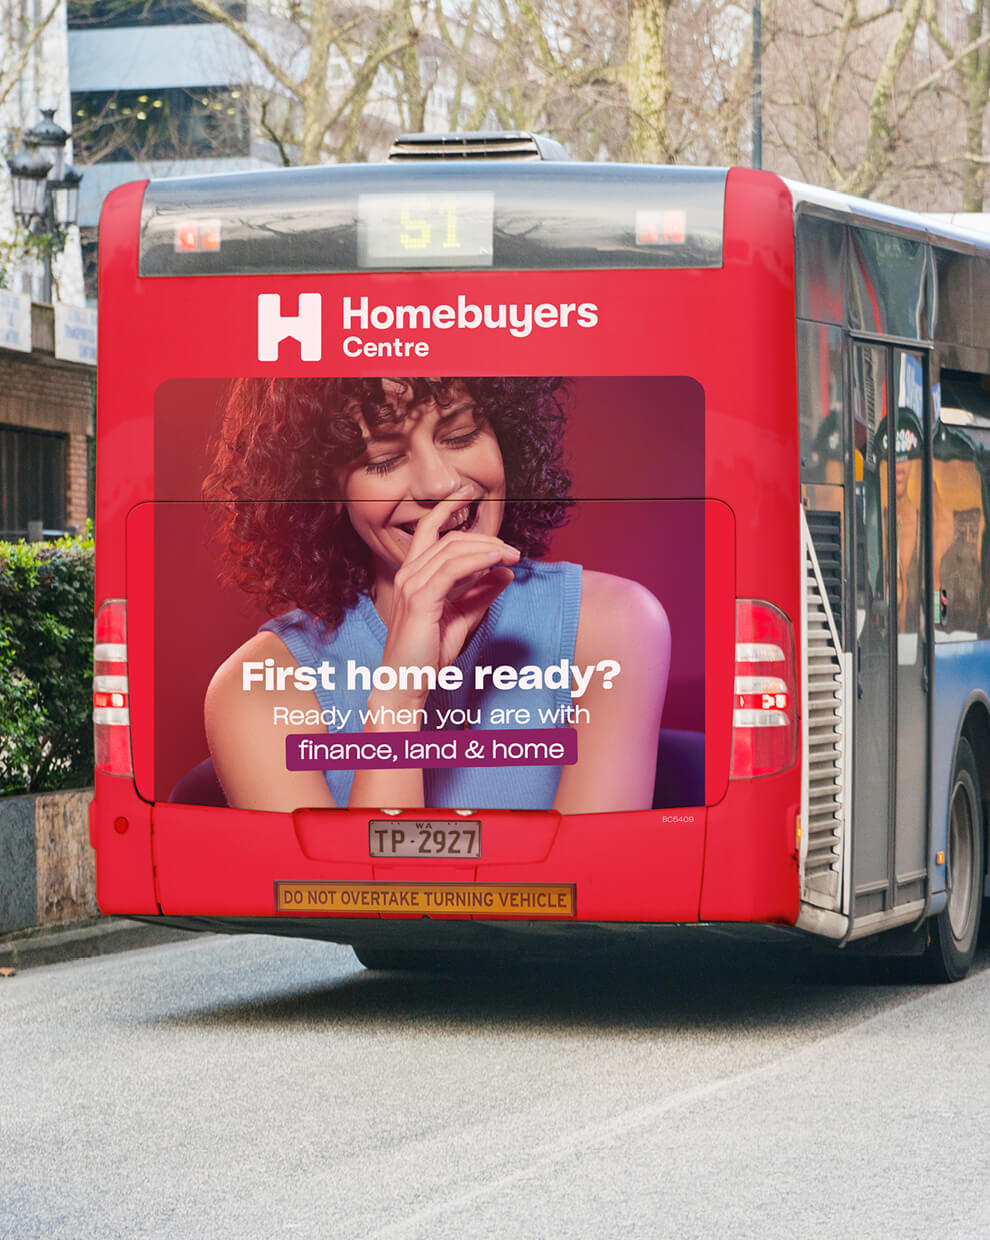 Homebuyers Centre branded bus back